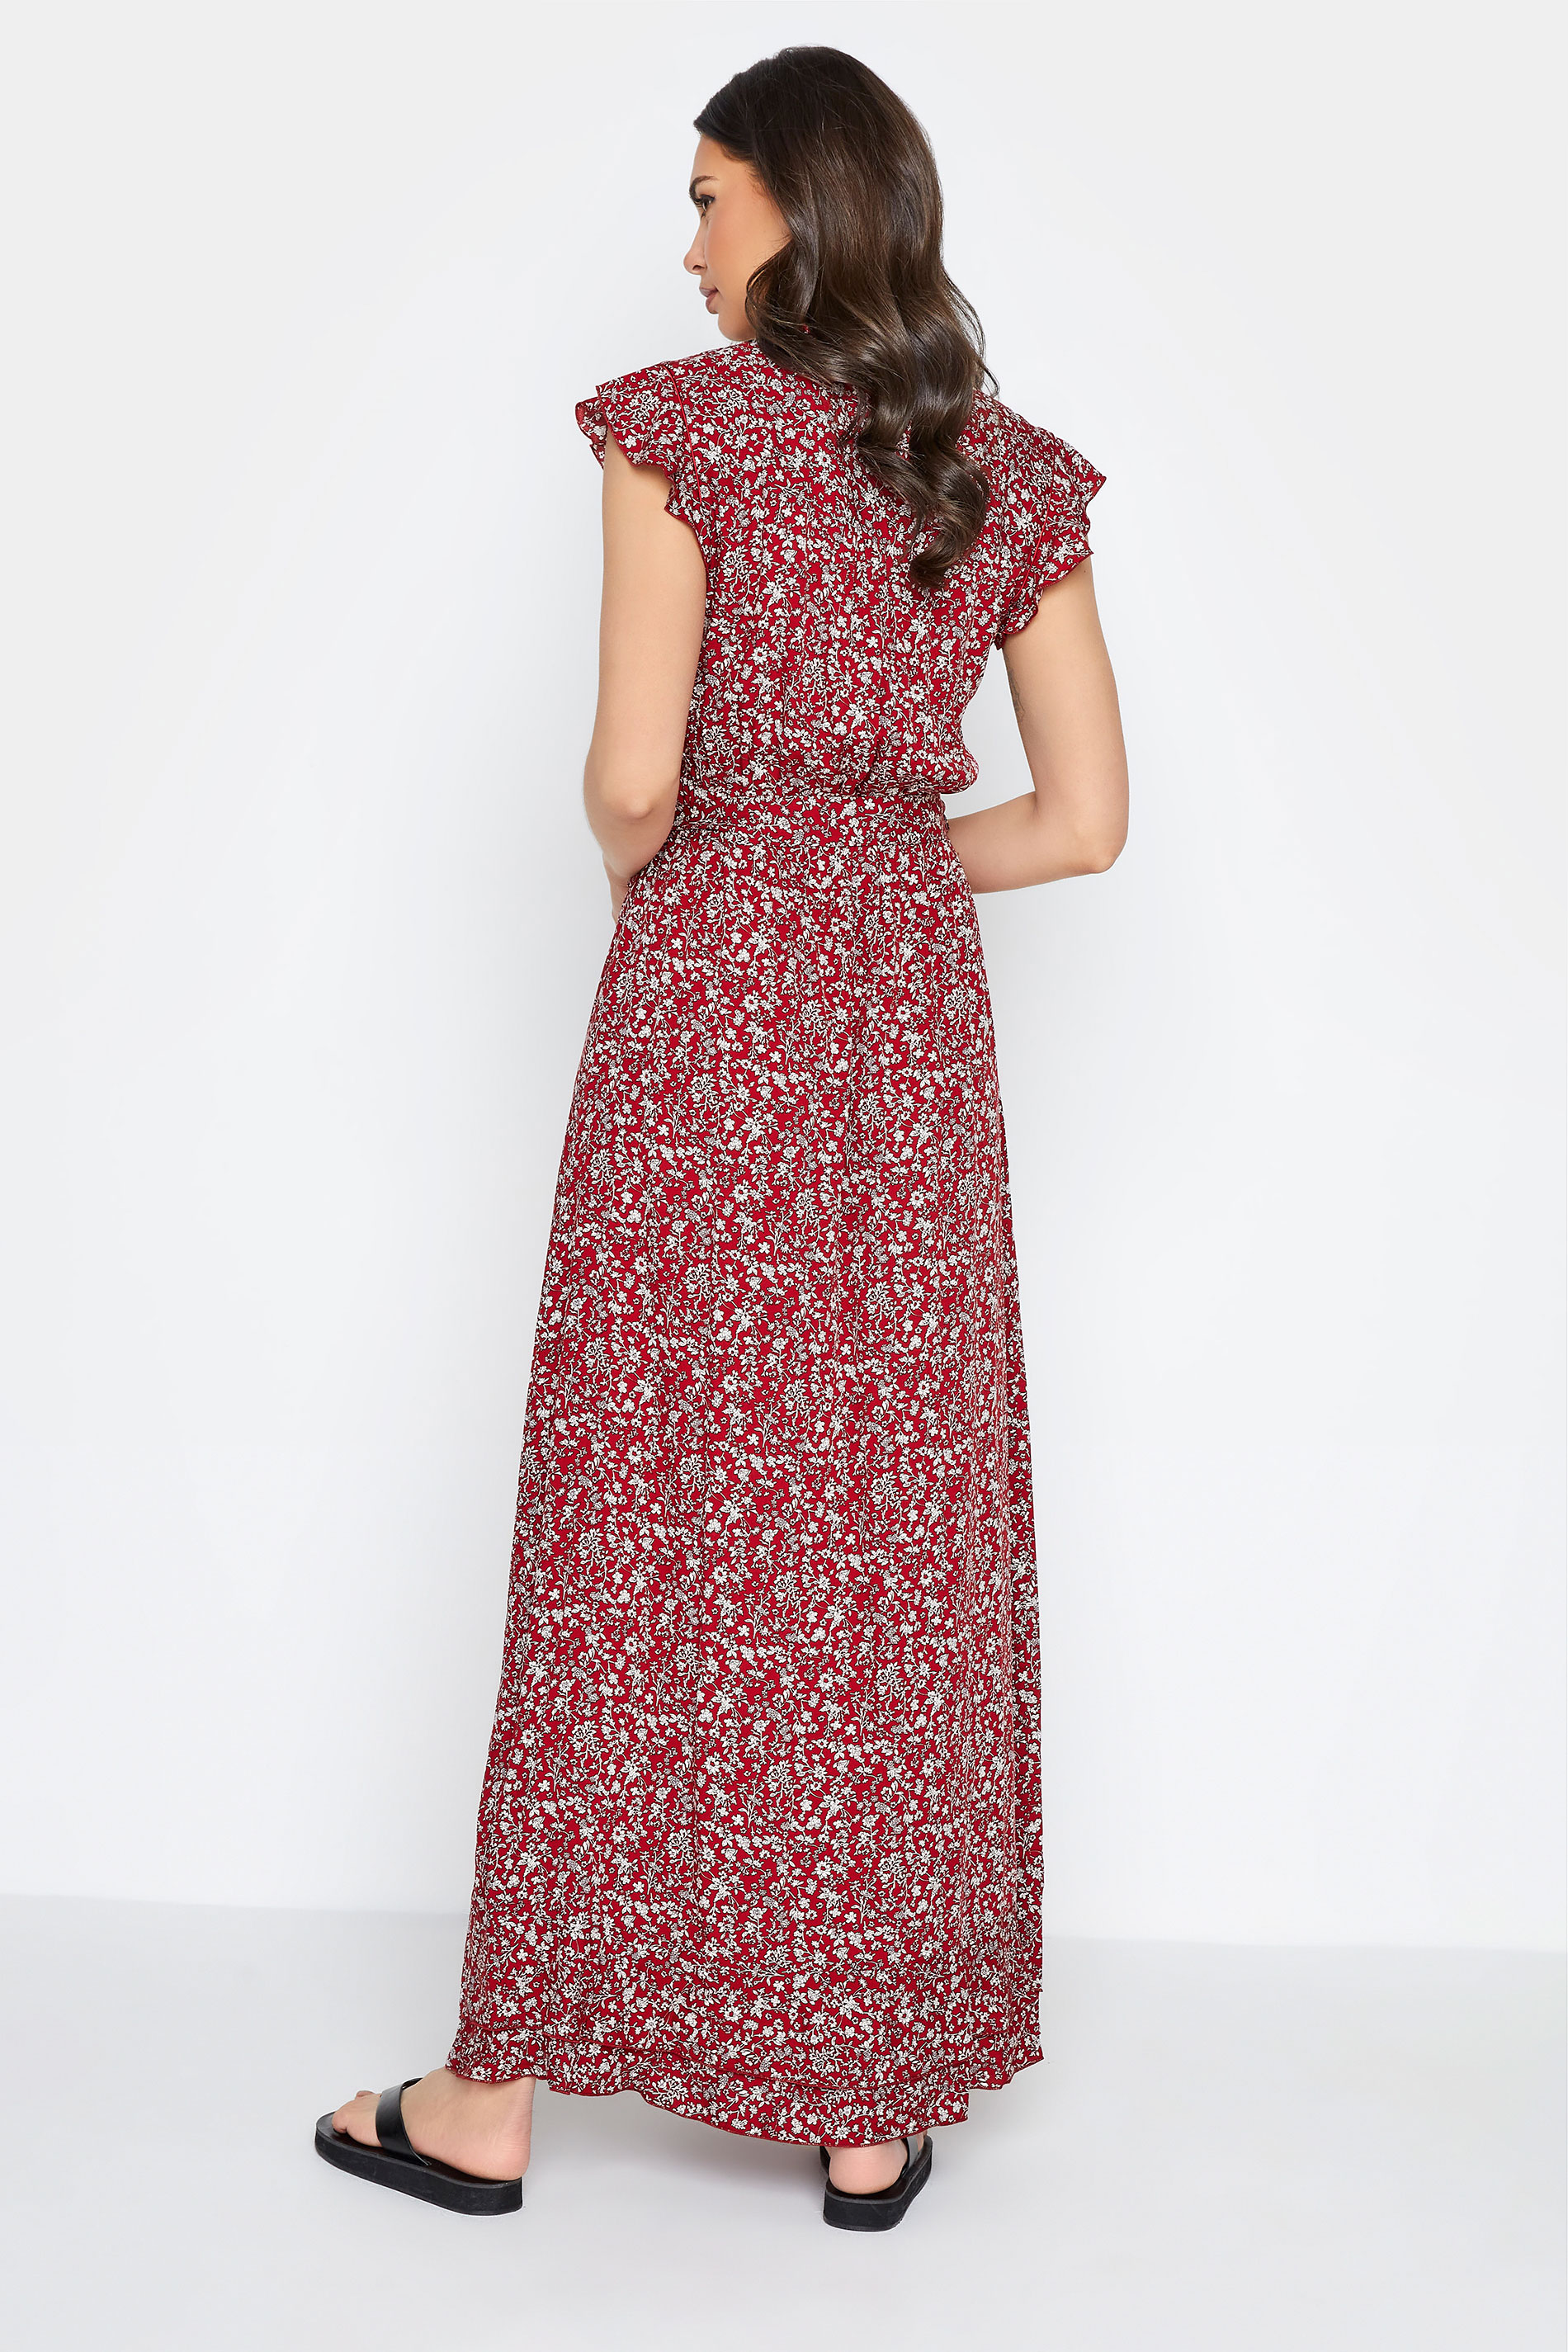 LTS Tall Women's Red Floral Frill Maxi Dress | Long Tall Sally 3